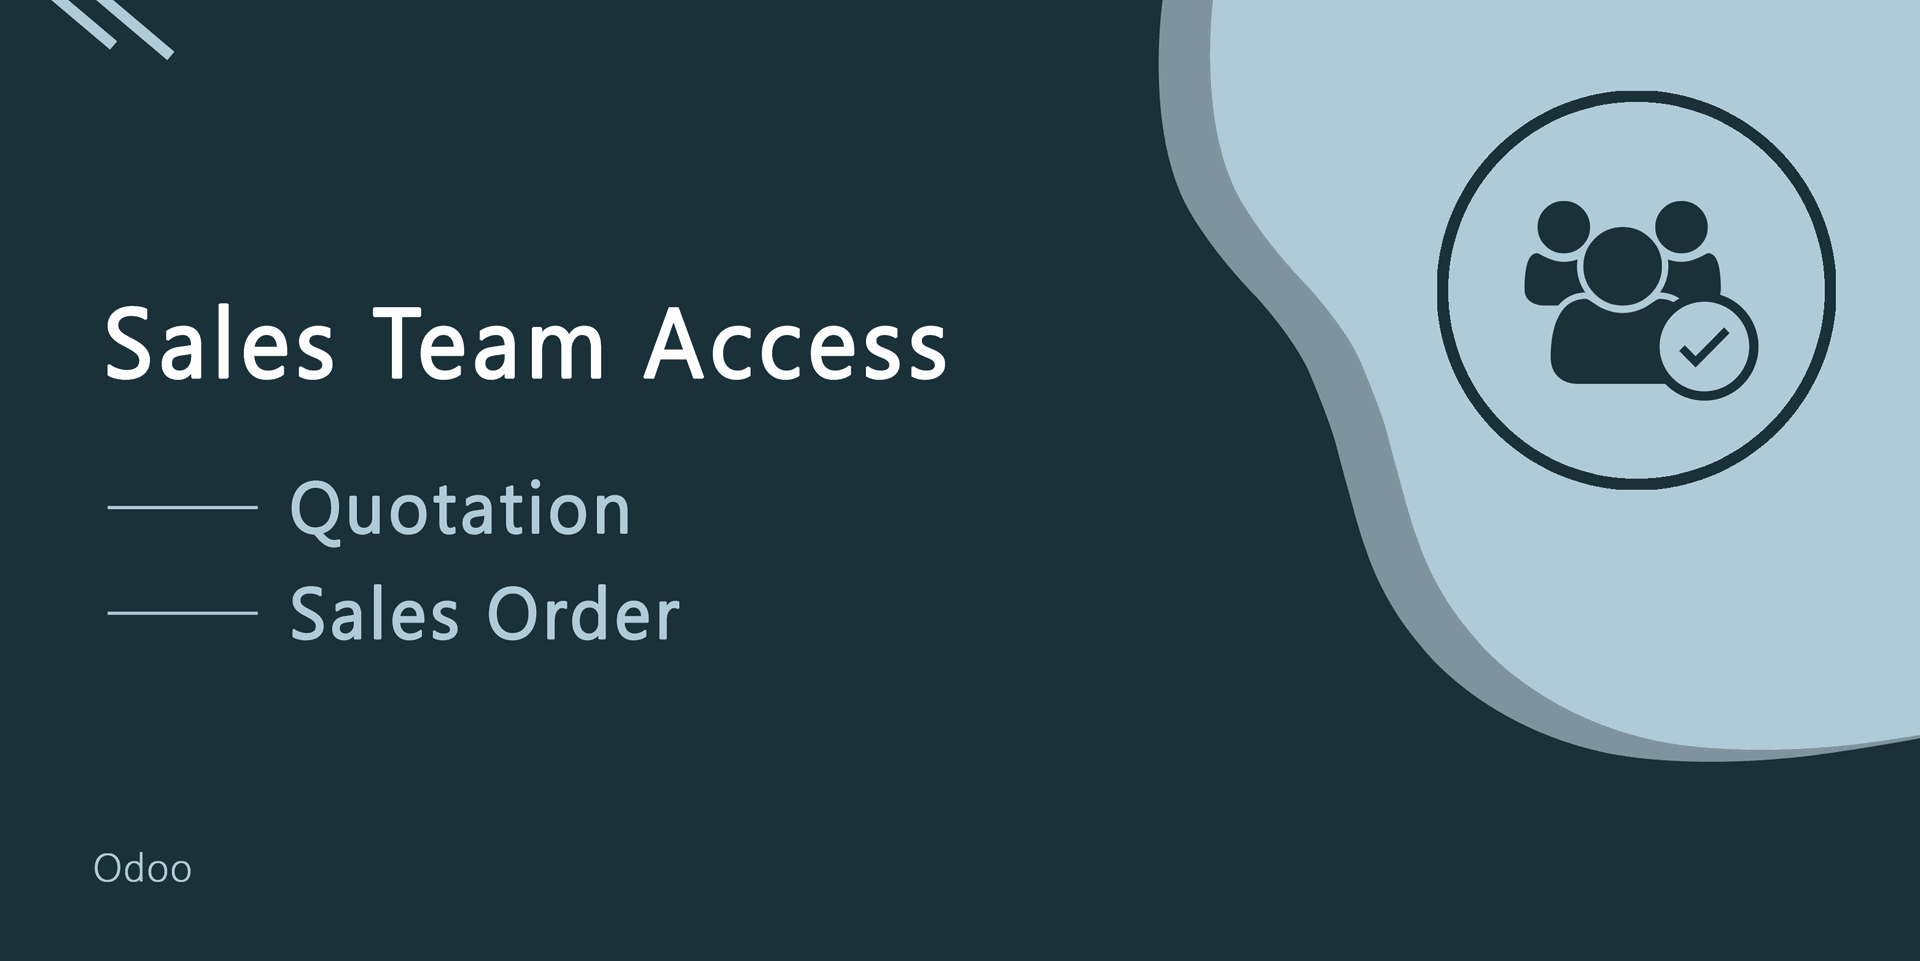 Sales Team Access
